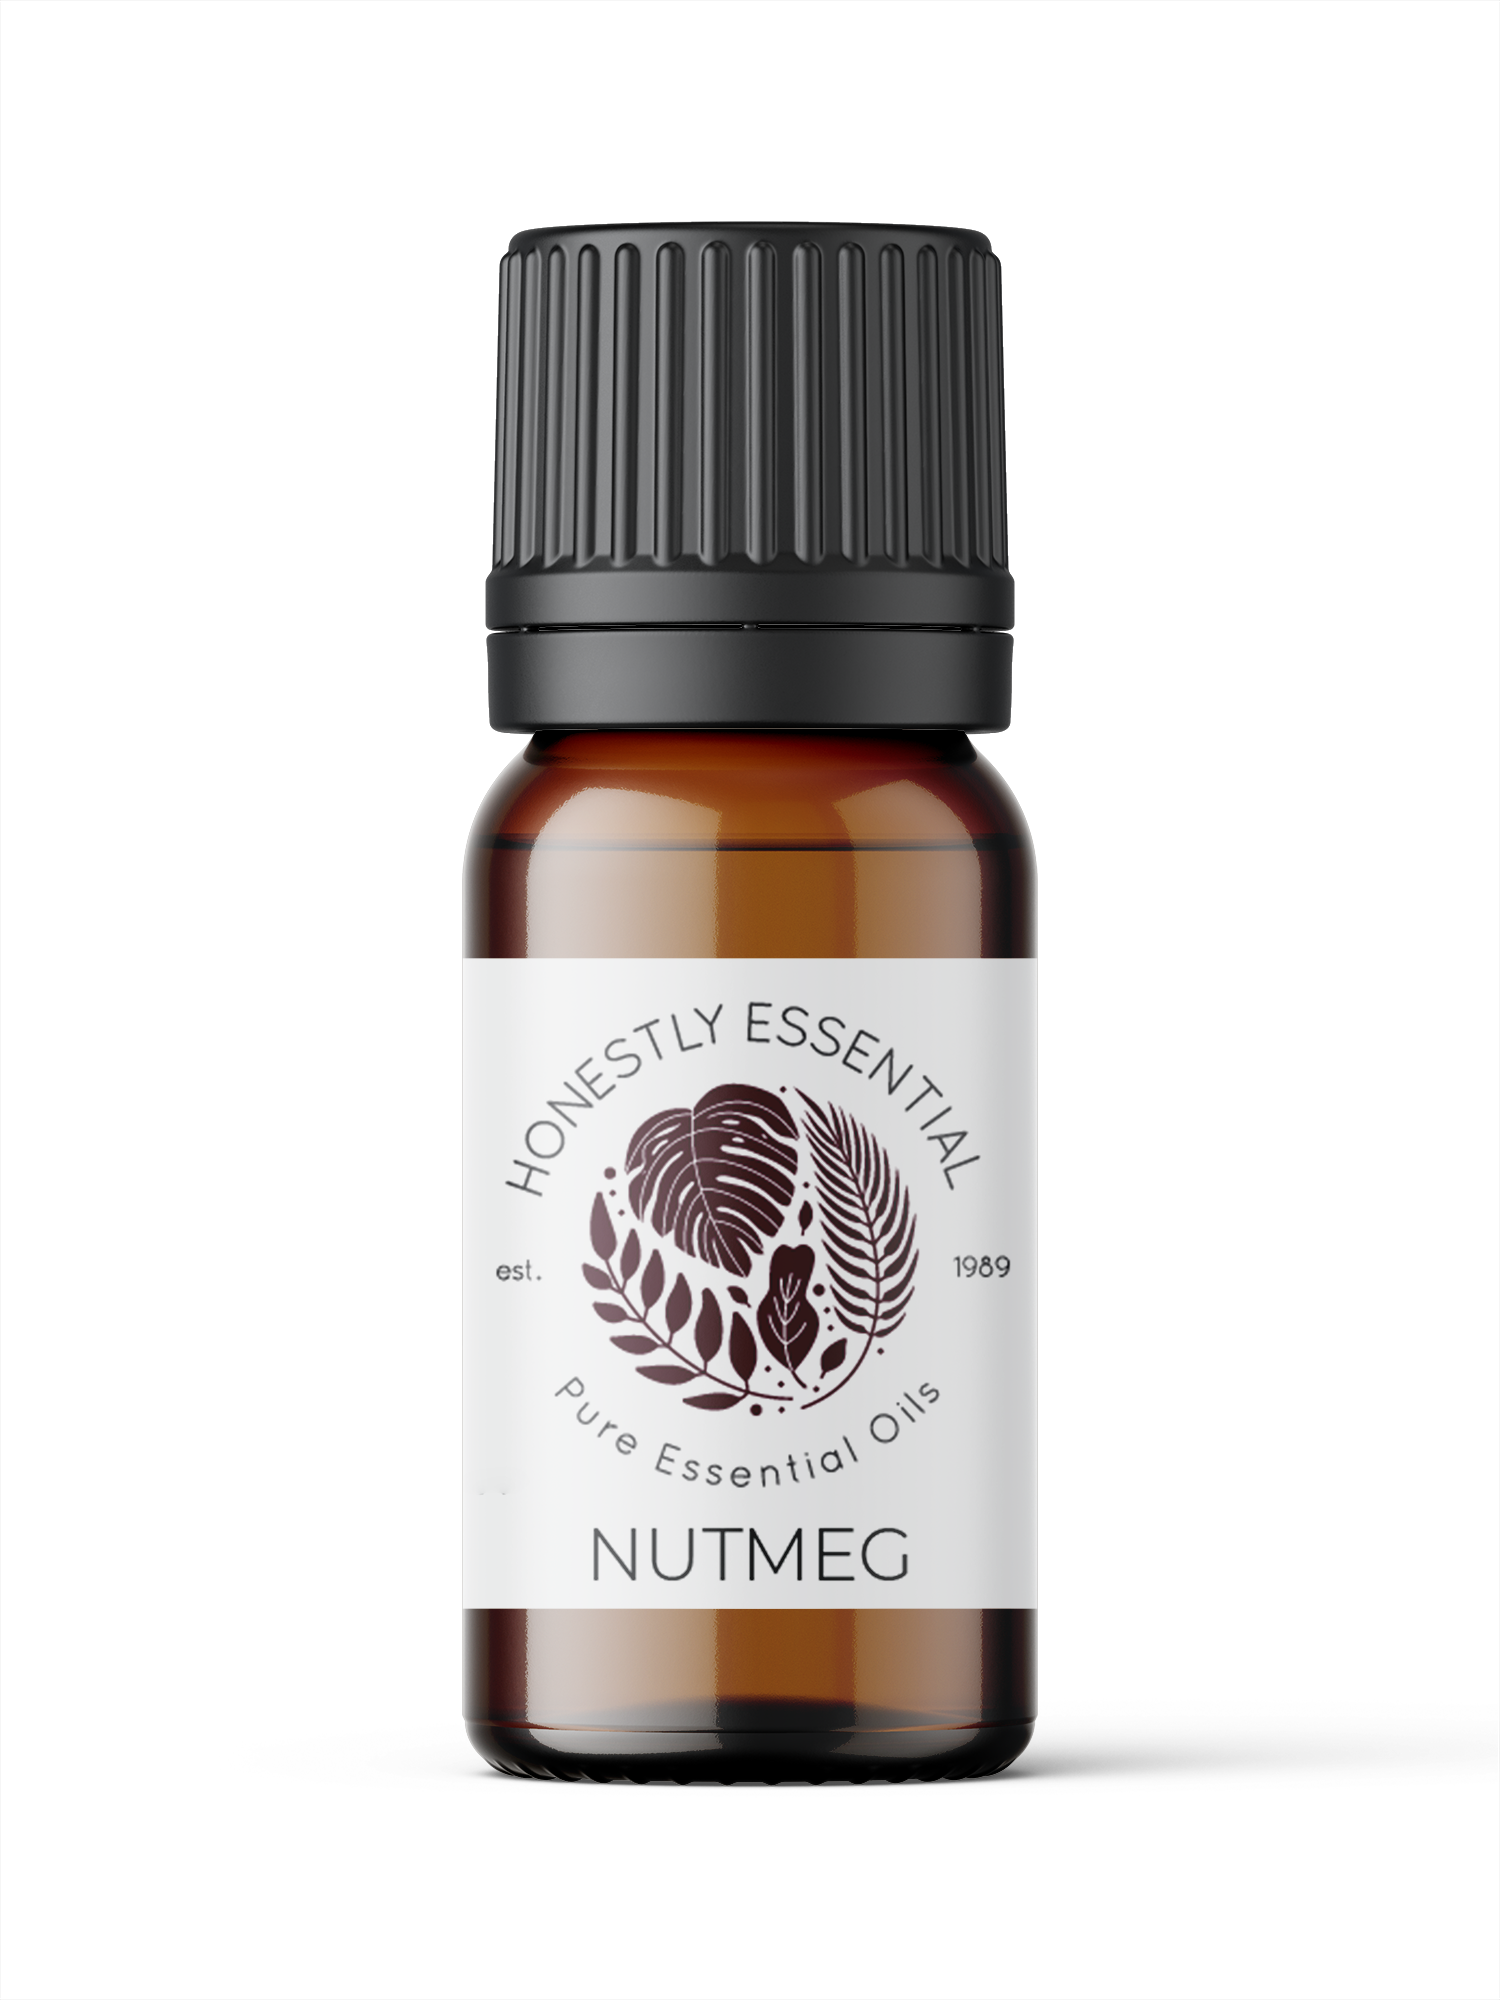 Nutmeg Essential Oil - Essential Oils | Honestly Essential Oils digestion, essential, immunity, nutmeg, oil, organic, spice essential oils, spices, tree, tree essential oil, trees